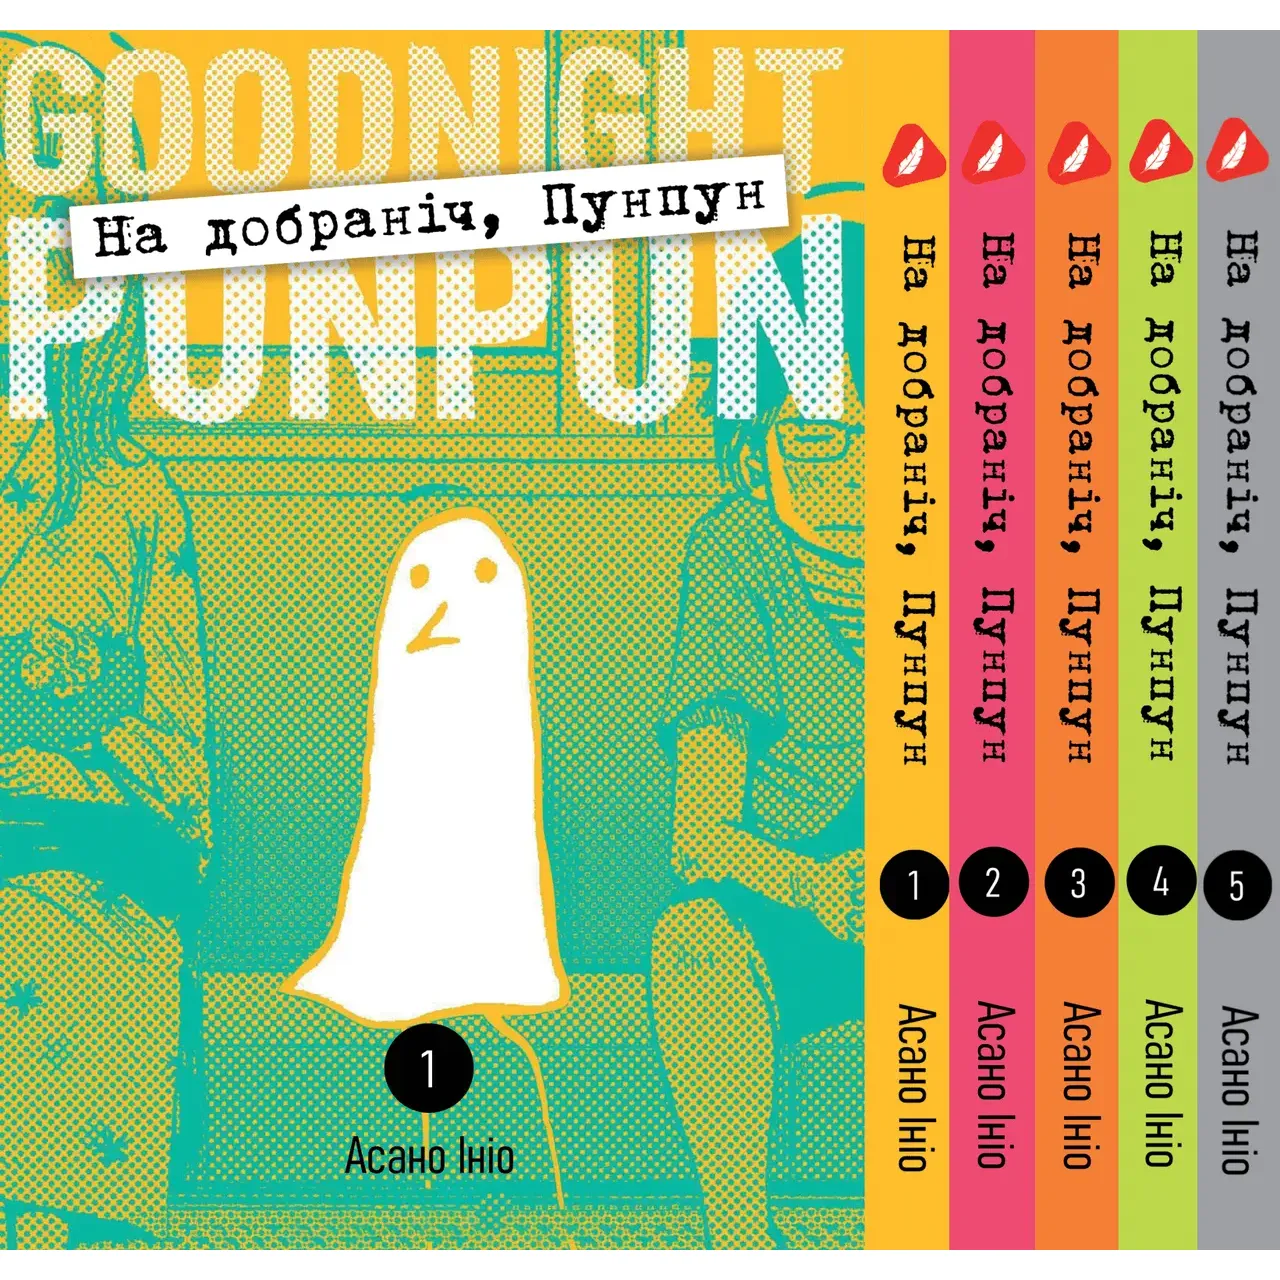 Комплект манги Yohoho Print Goodnight Punpun Спокойной ночи Пунпун Том с 1 - 5 YP GP K 01 - Асано Инио (1832373405.0) - фото 1